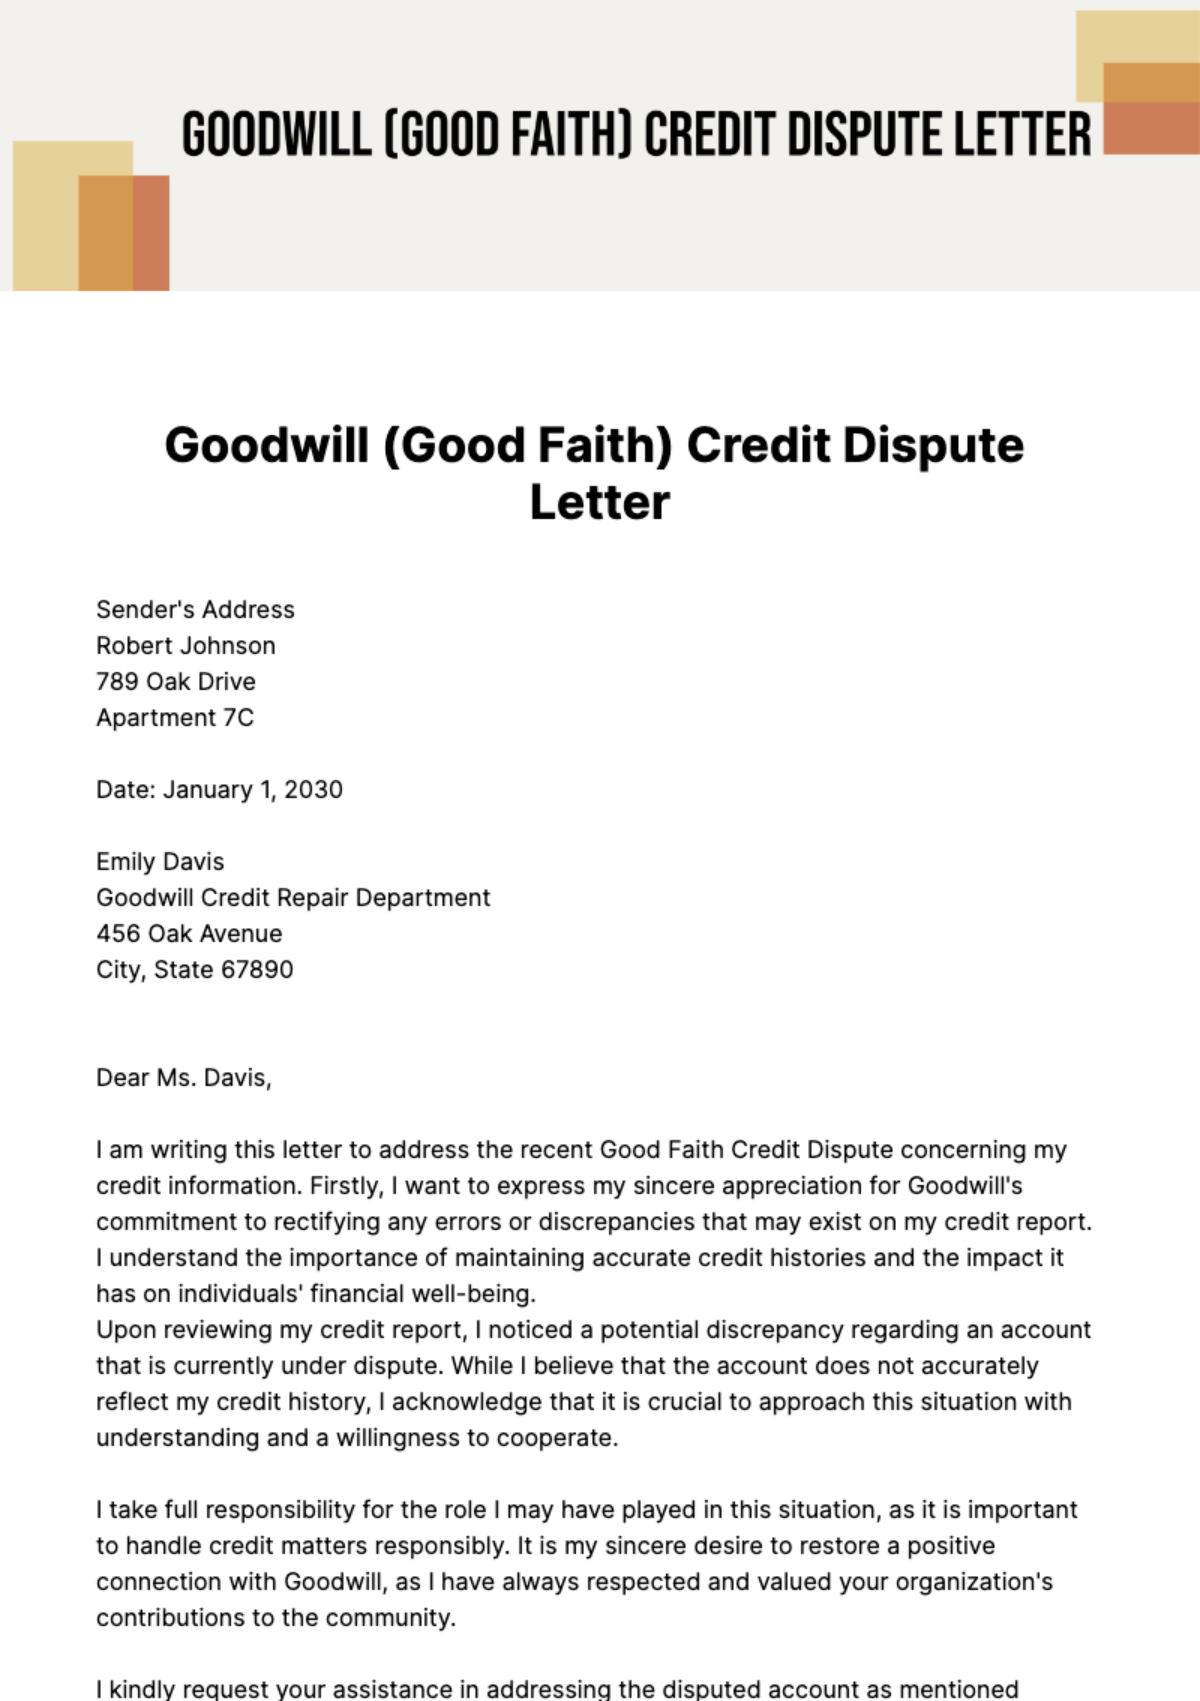 Goodwill (Good Faith) Credit Dispute Letter Template